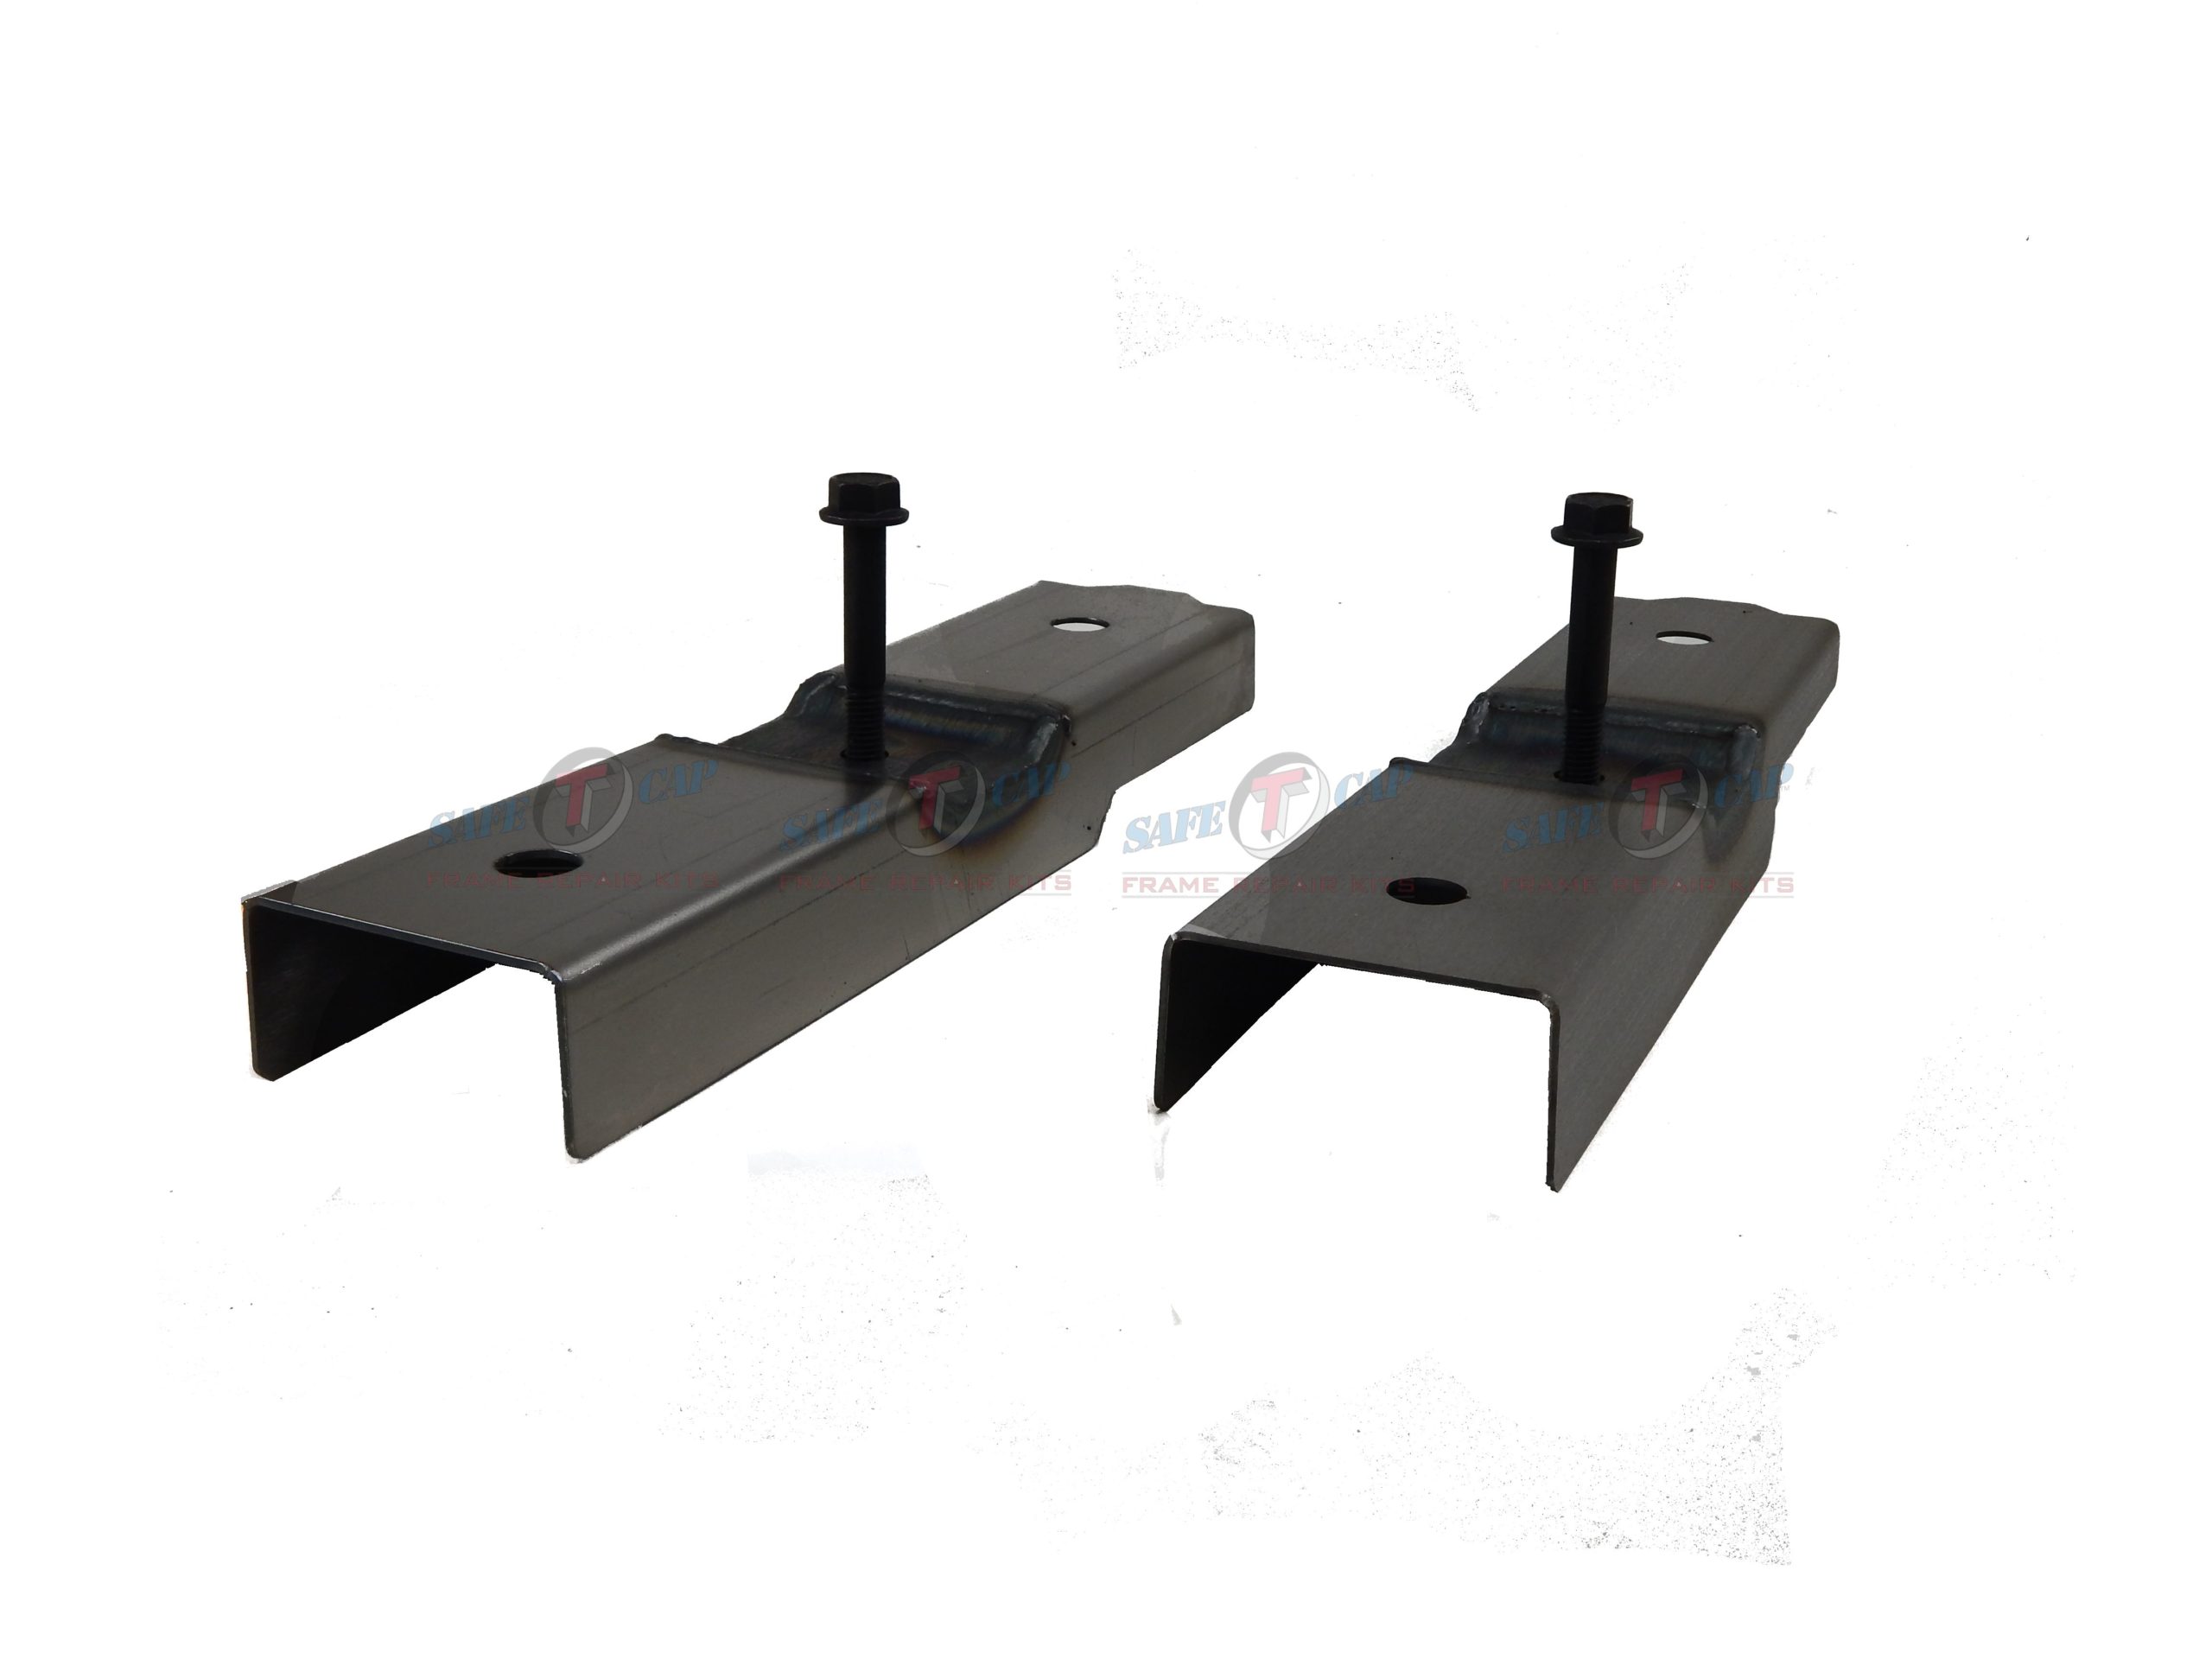 Floor Support / Torque Box Mid Mount Set for Wrangler TJ 97-06 (ART-138-S)  